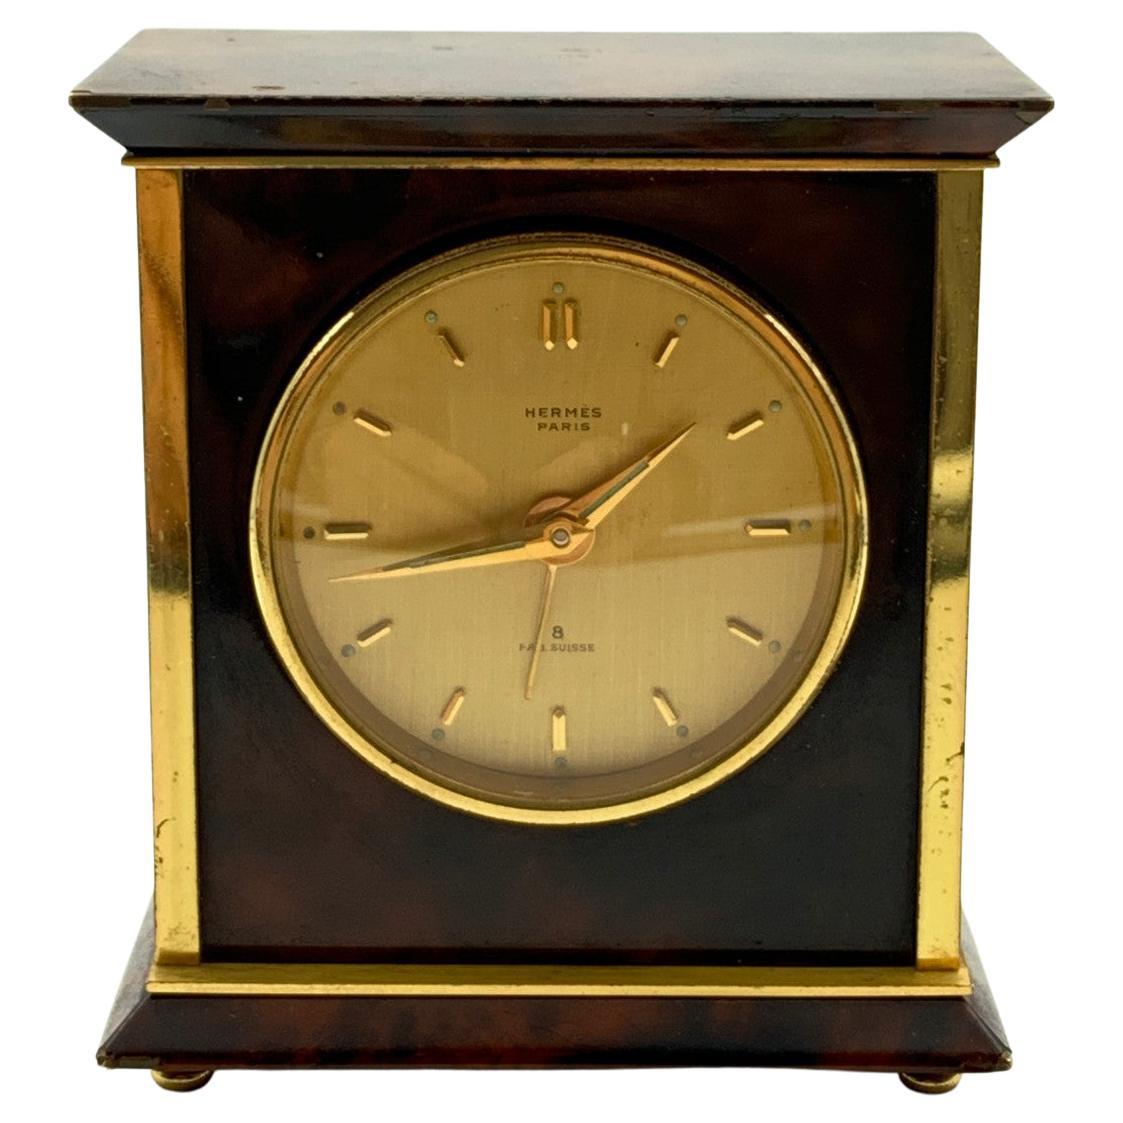 Hermes Paris Vintage Mechanical Table Travel Alarm Clock 1227